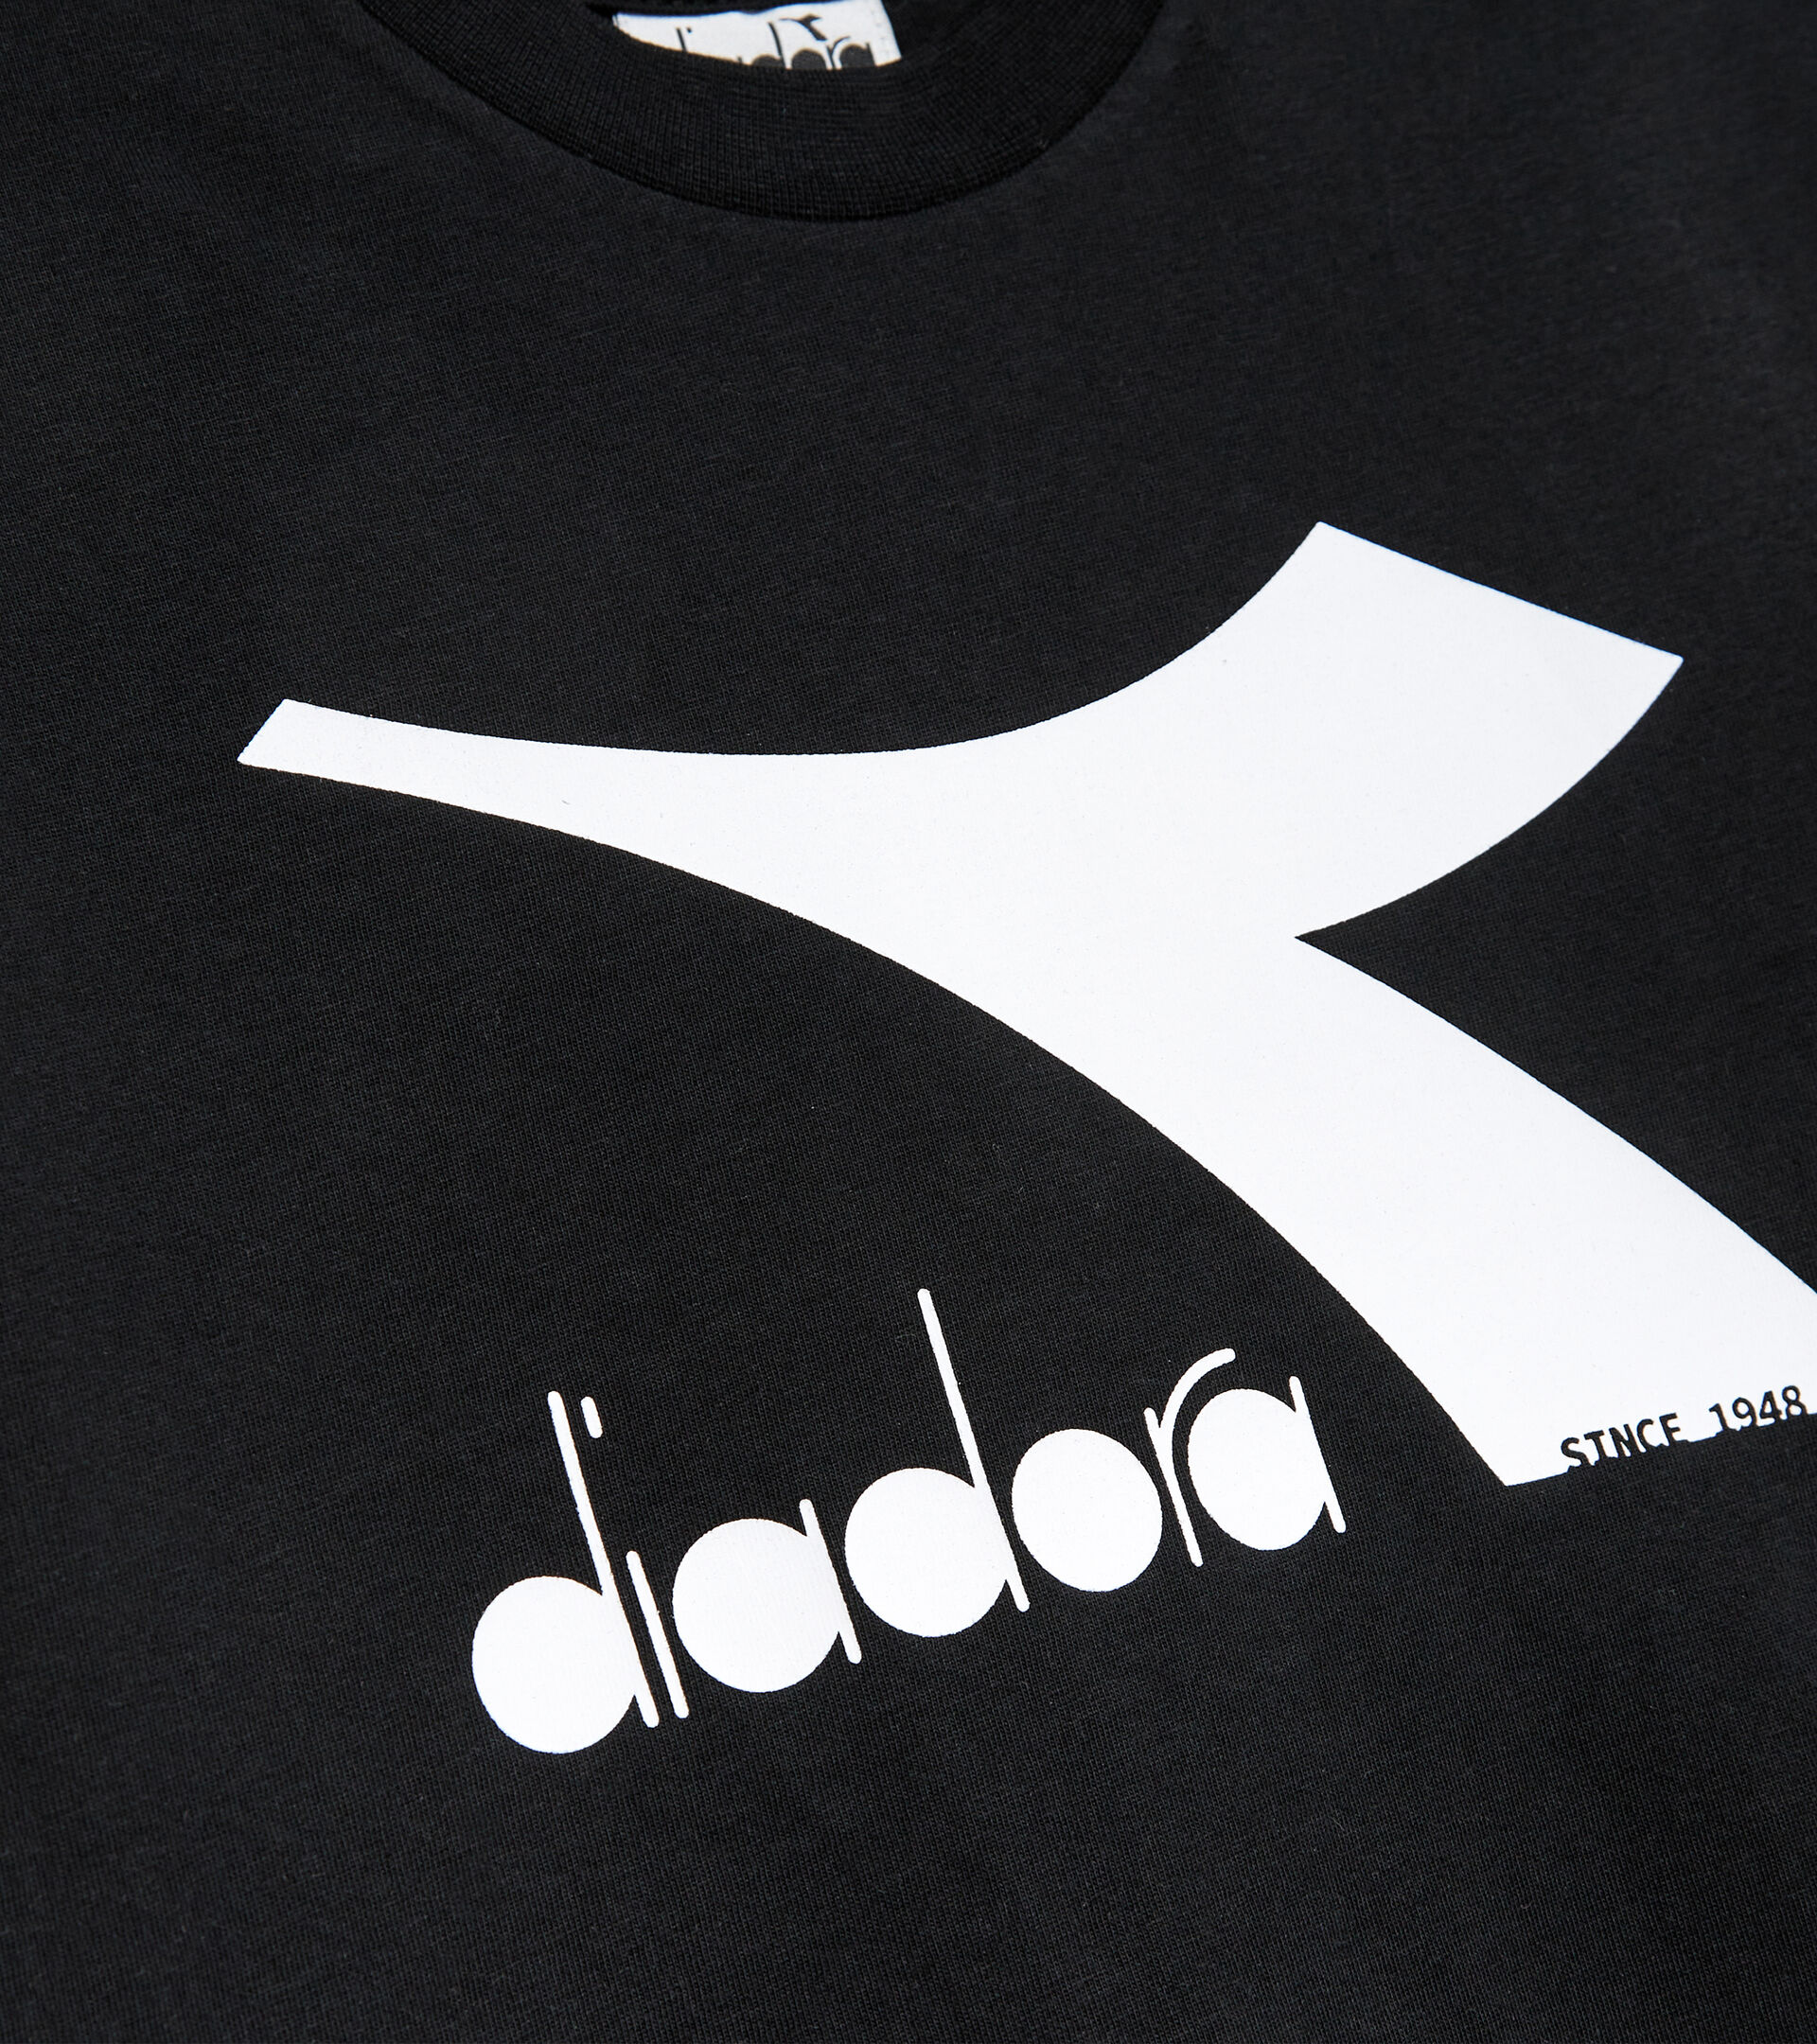 Sports T-shirt - Kids JU.T-SHIRT SS BL BLACK - Diadora